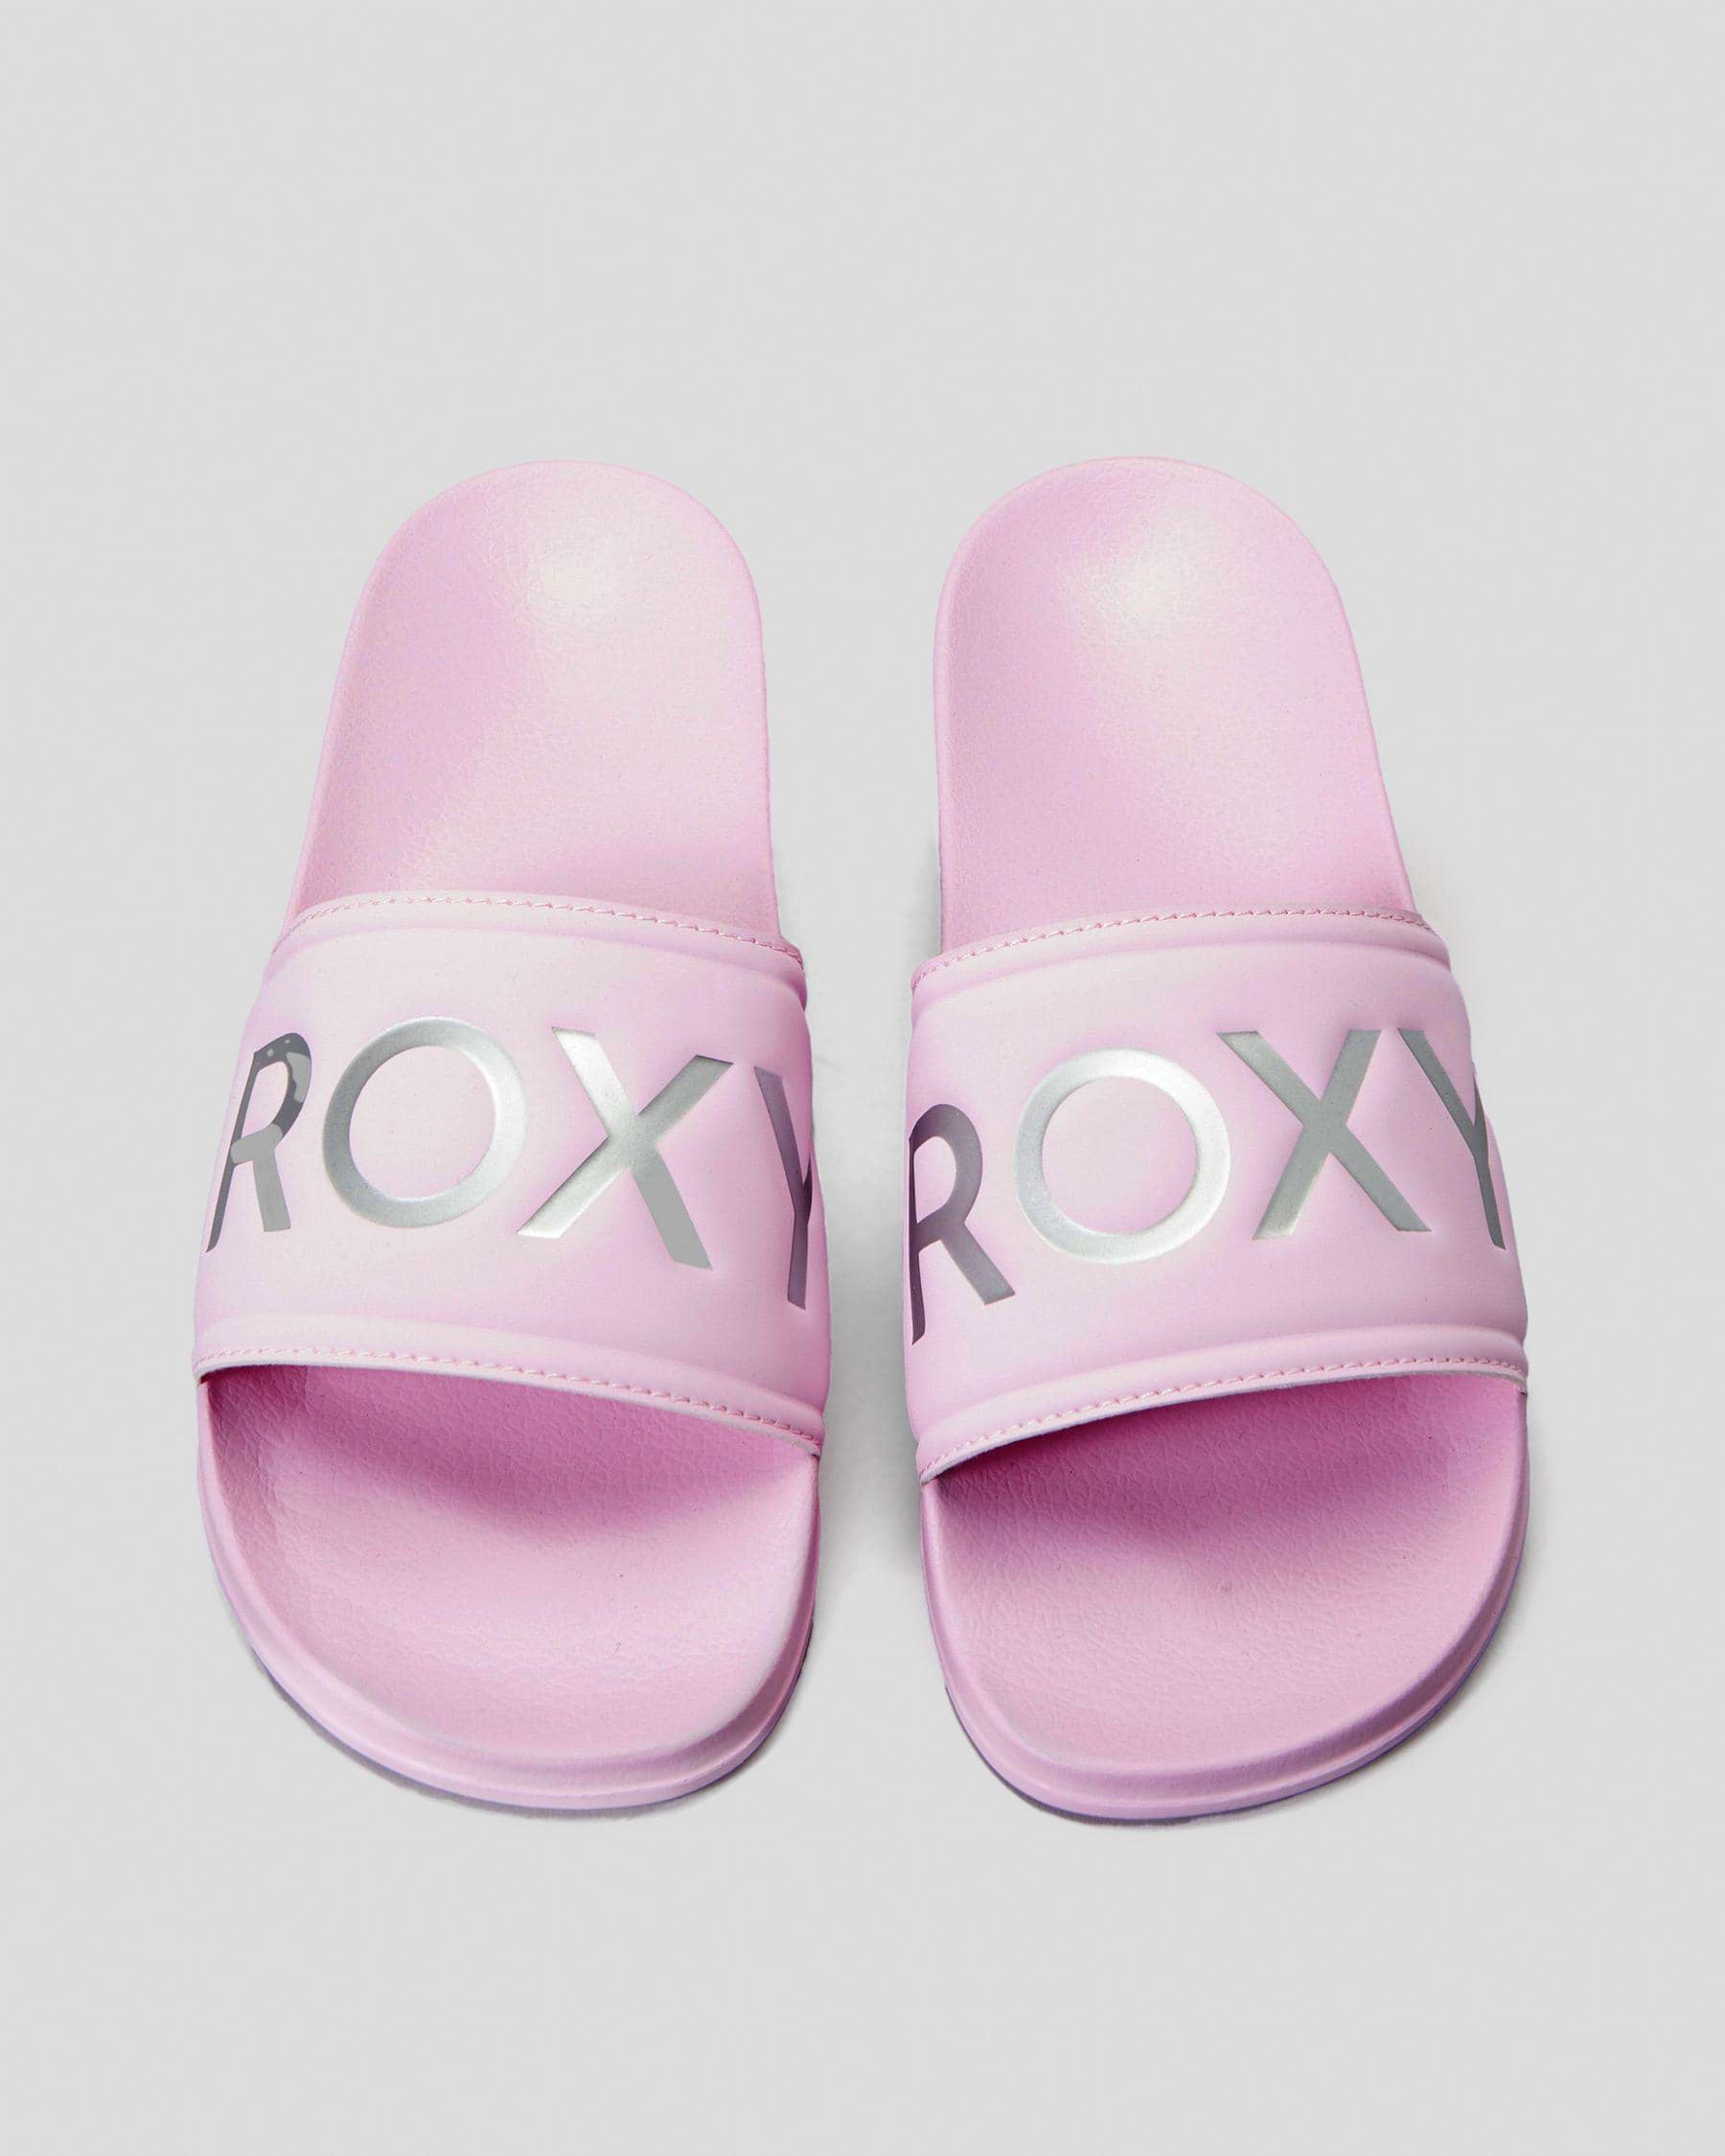 Roxy Slippy Slide Sandals In Pink - Fast Shipping & Easy Returns - City ...